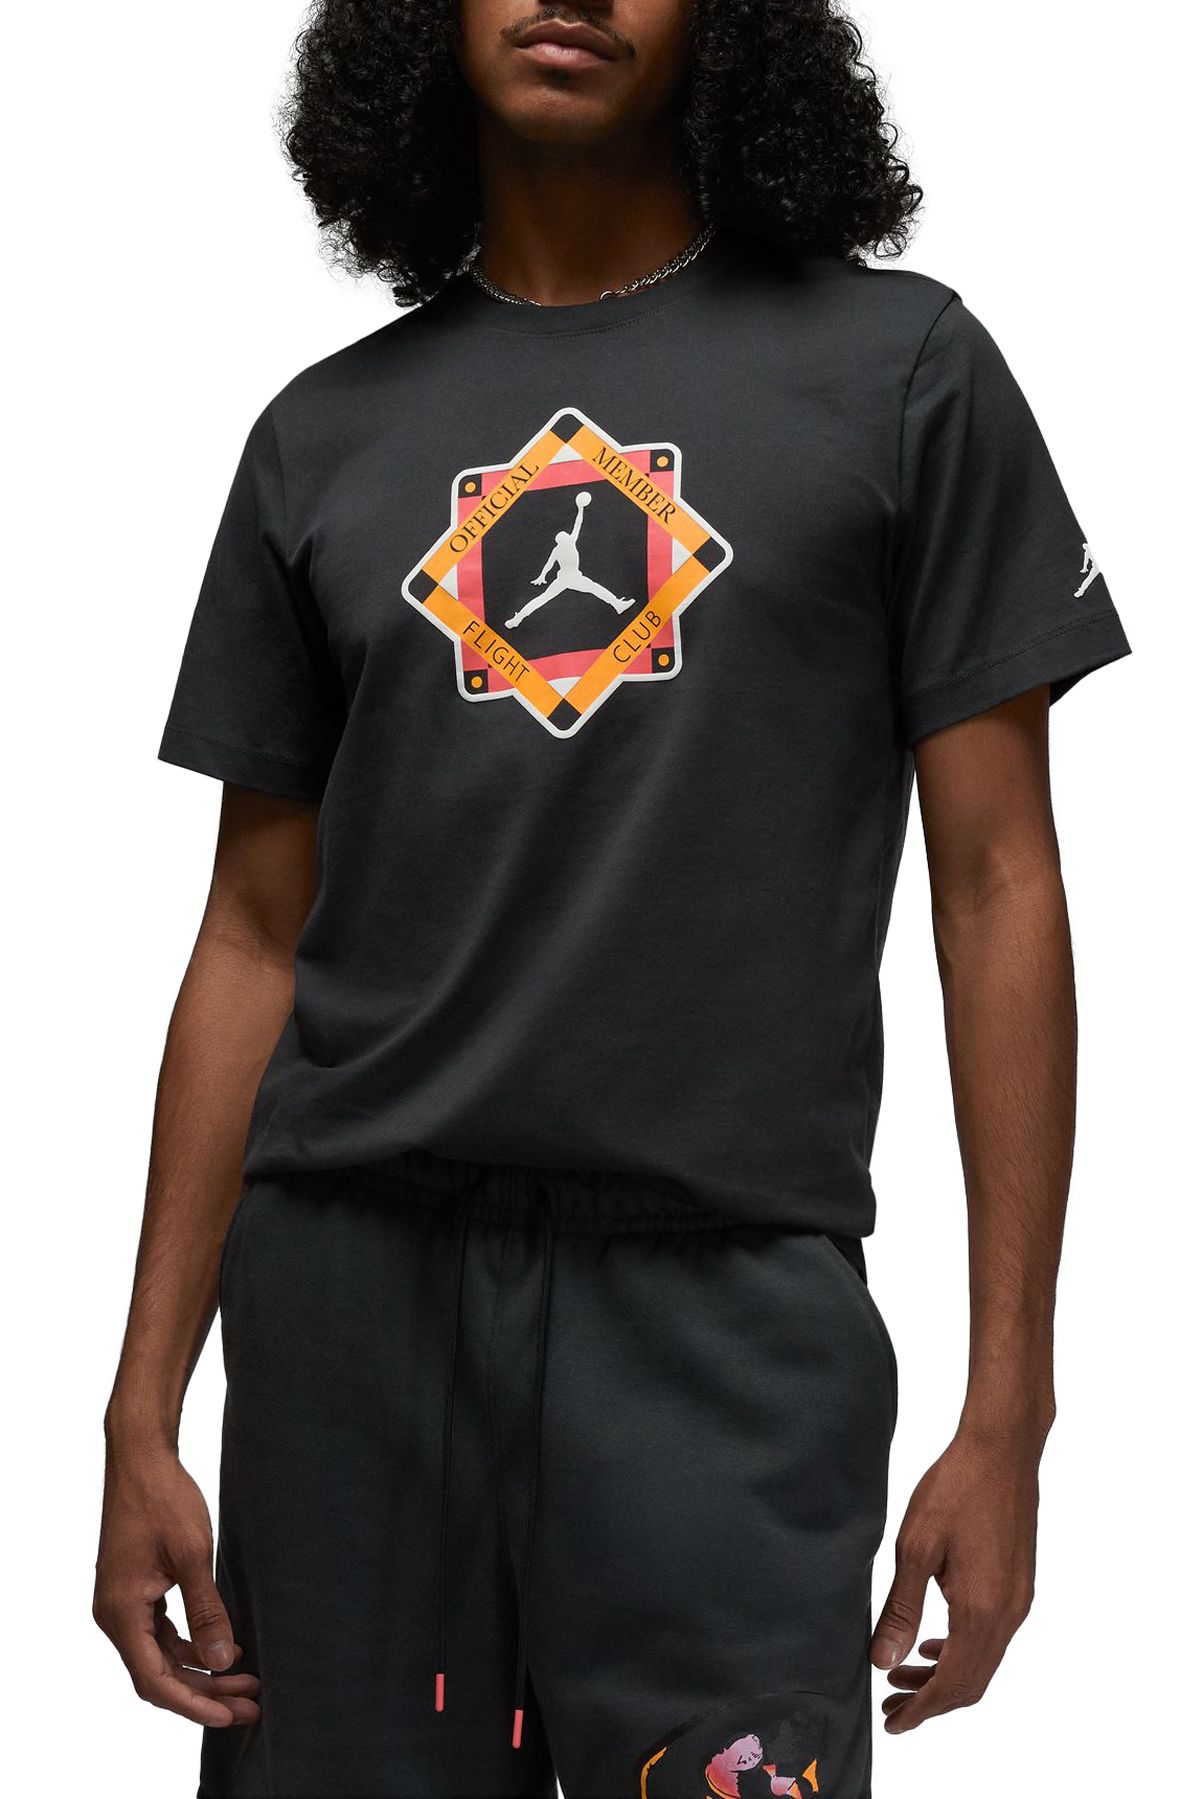 Jordan, Shirts, New Nike Air Jordan Dry Graphic 3 Tshirt Mens Size Small  Red Athletic